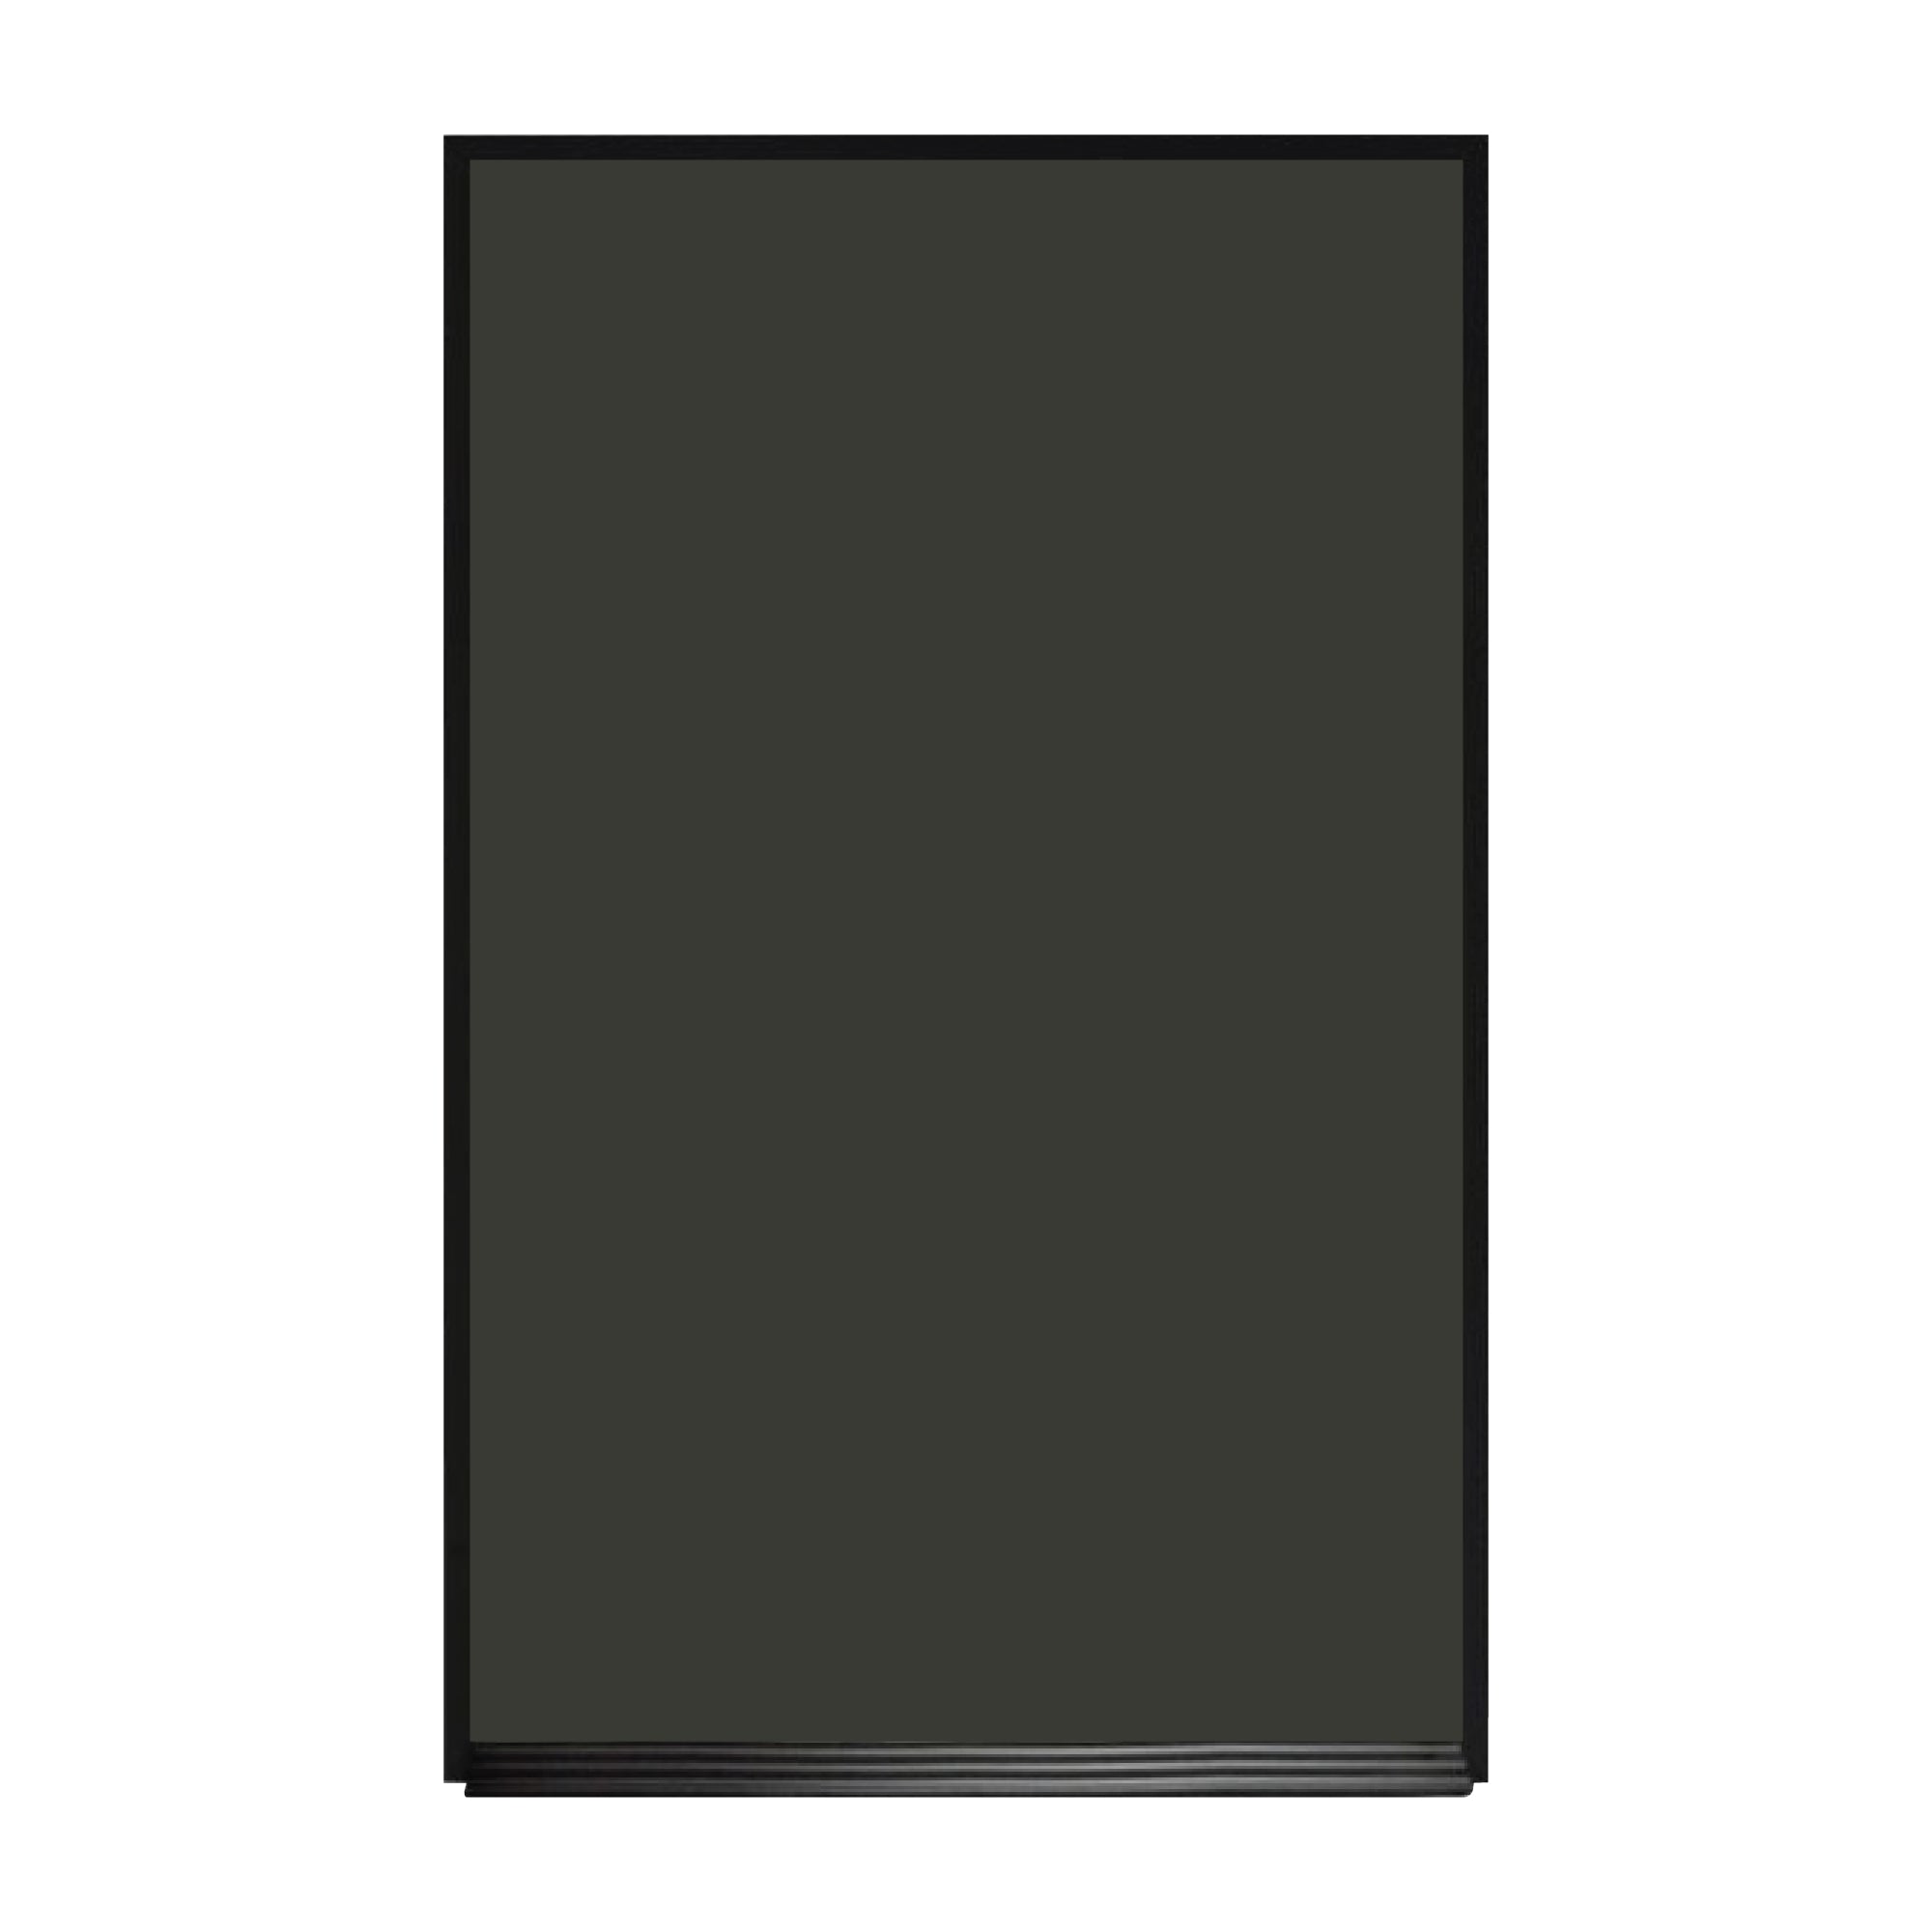 Ebony Aluminum Frame | Portrait Black Ceramic Steel Chalkboard